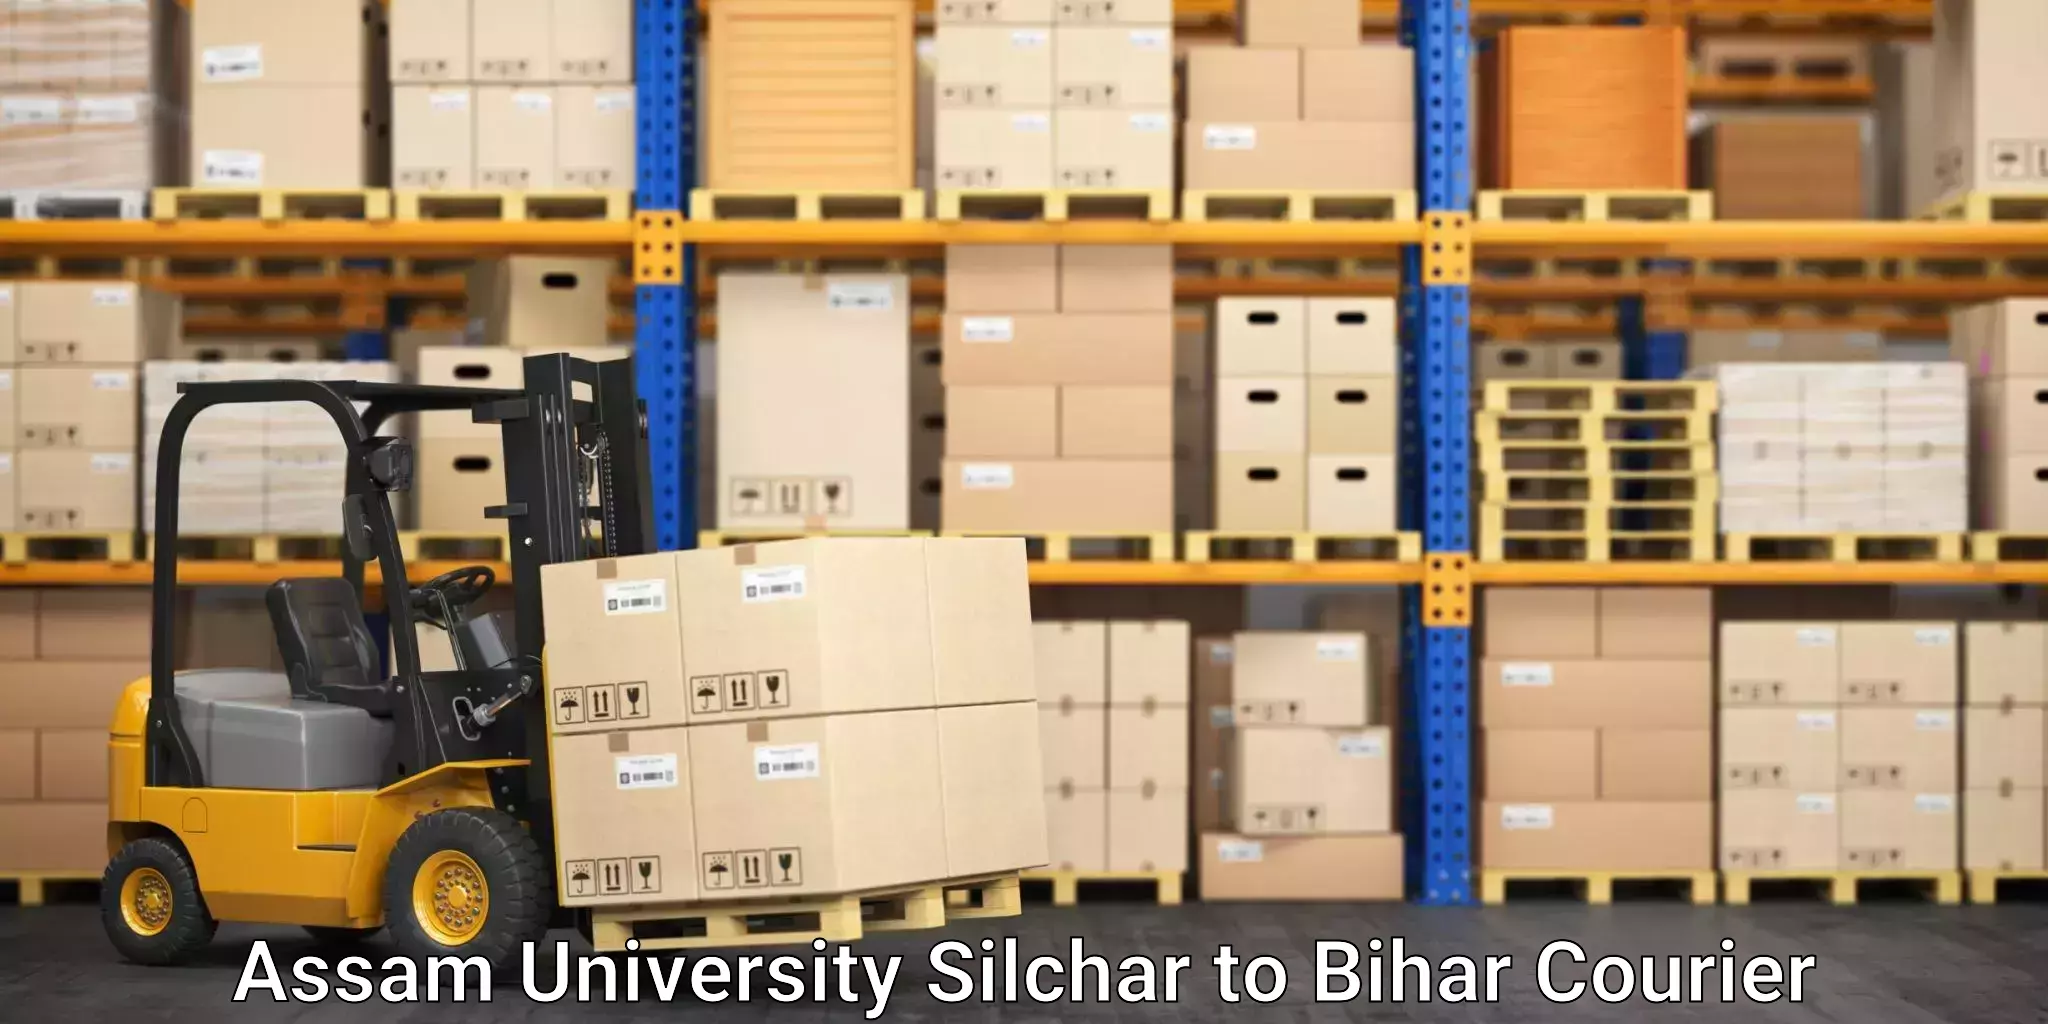 Fast delivery service Assam University Silchar to Samastipur